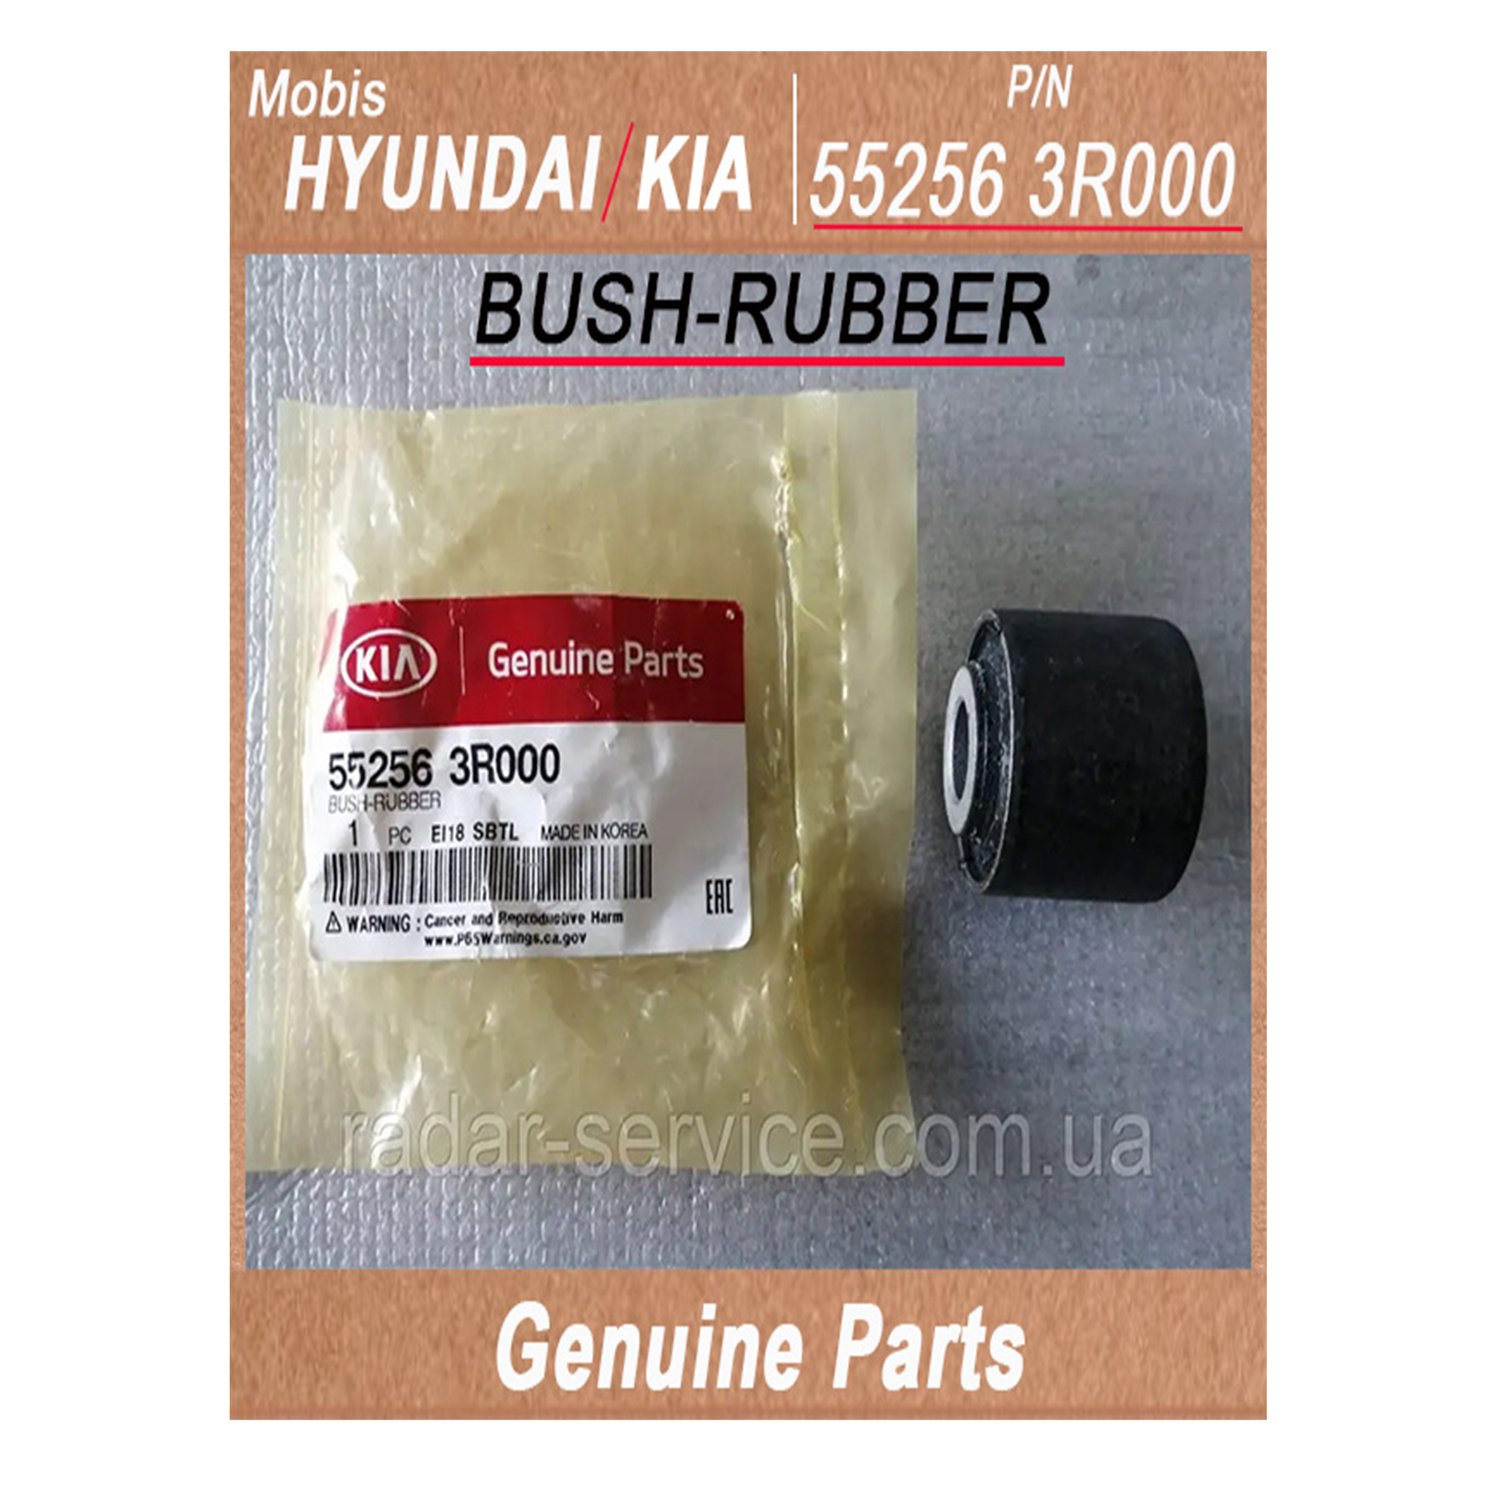 552563R000 _ BUSH_RUBBER _ Genuine Korean Automotive Spare Parts _ Hyundai Kia _Mobis_